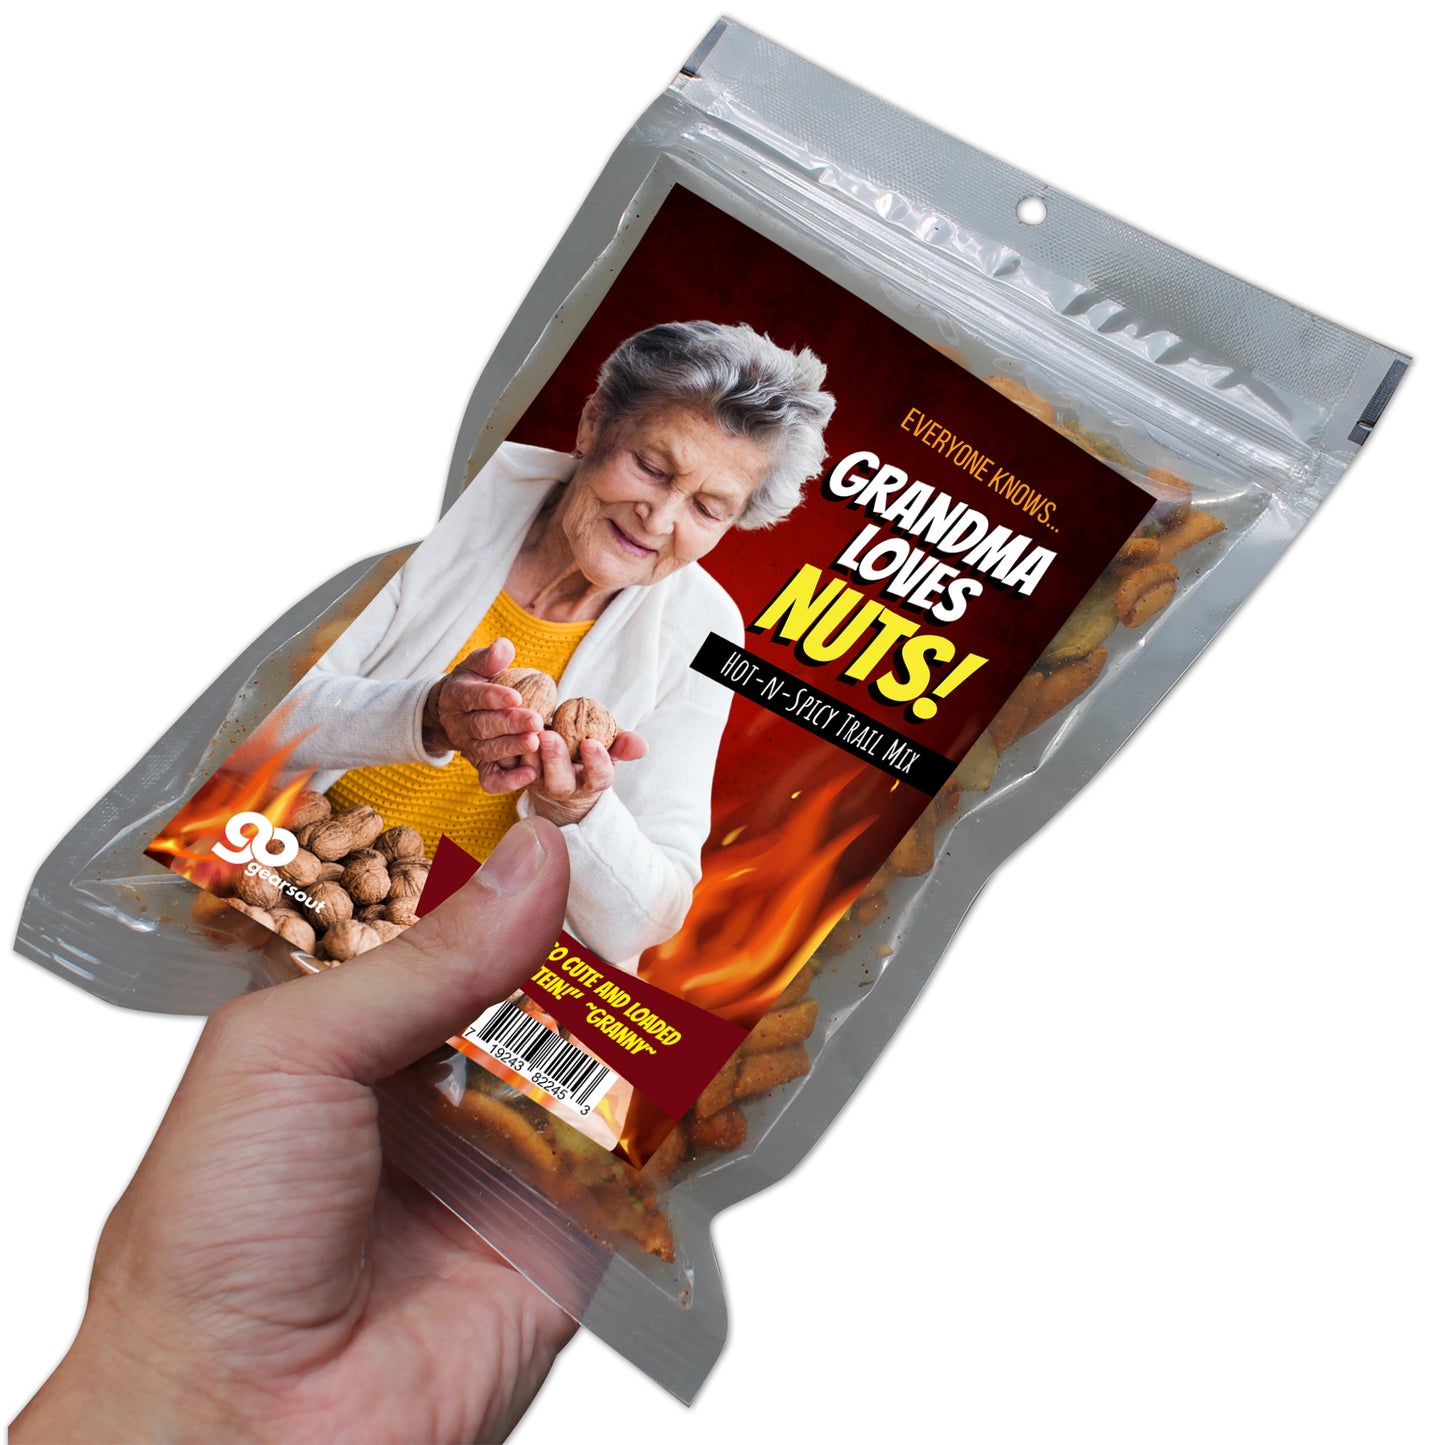 Grandma Loves Nuts Spicy Trail Mix